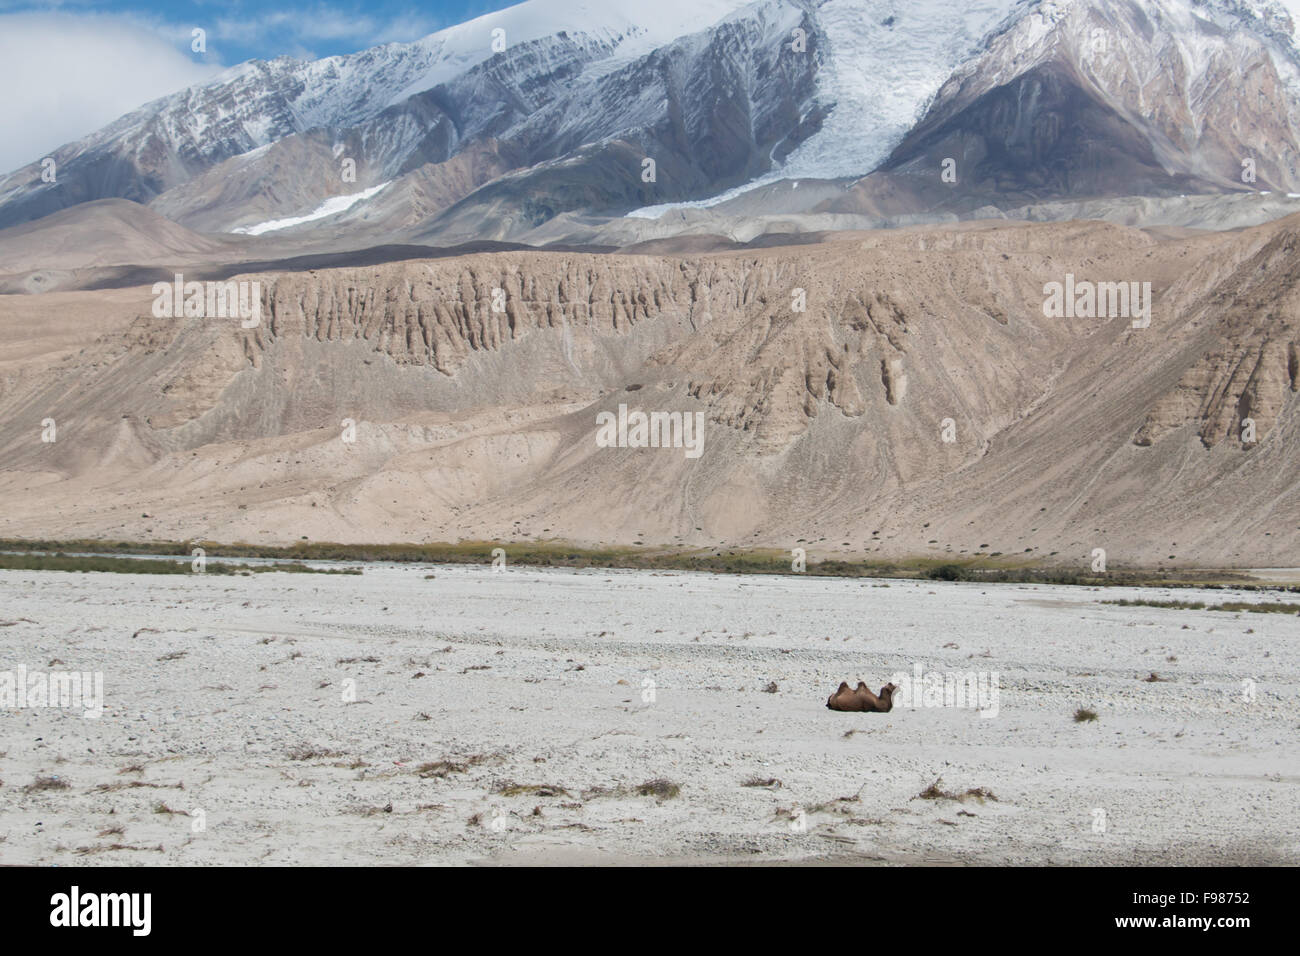 Single camel sitting in a vast mountain landscape Stock Photo